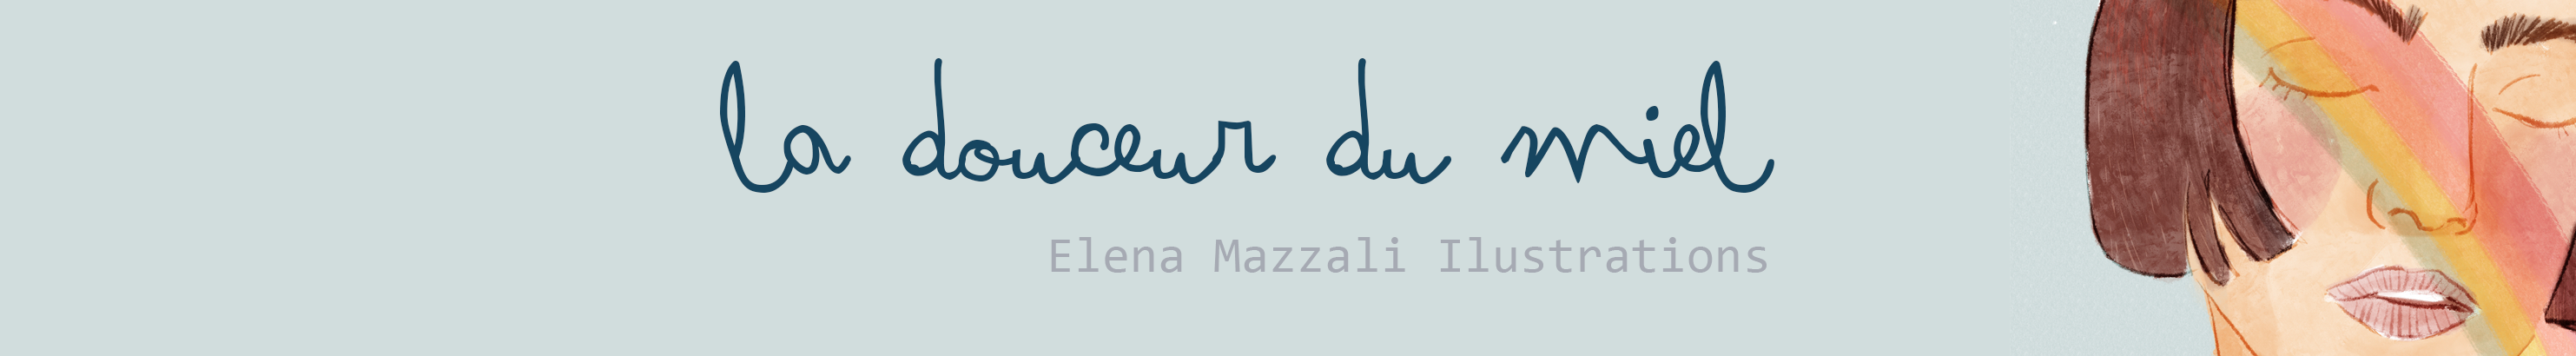 Profil-Banner von Elena Mazzali